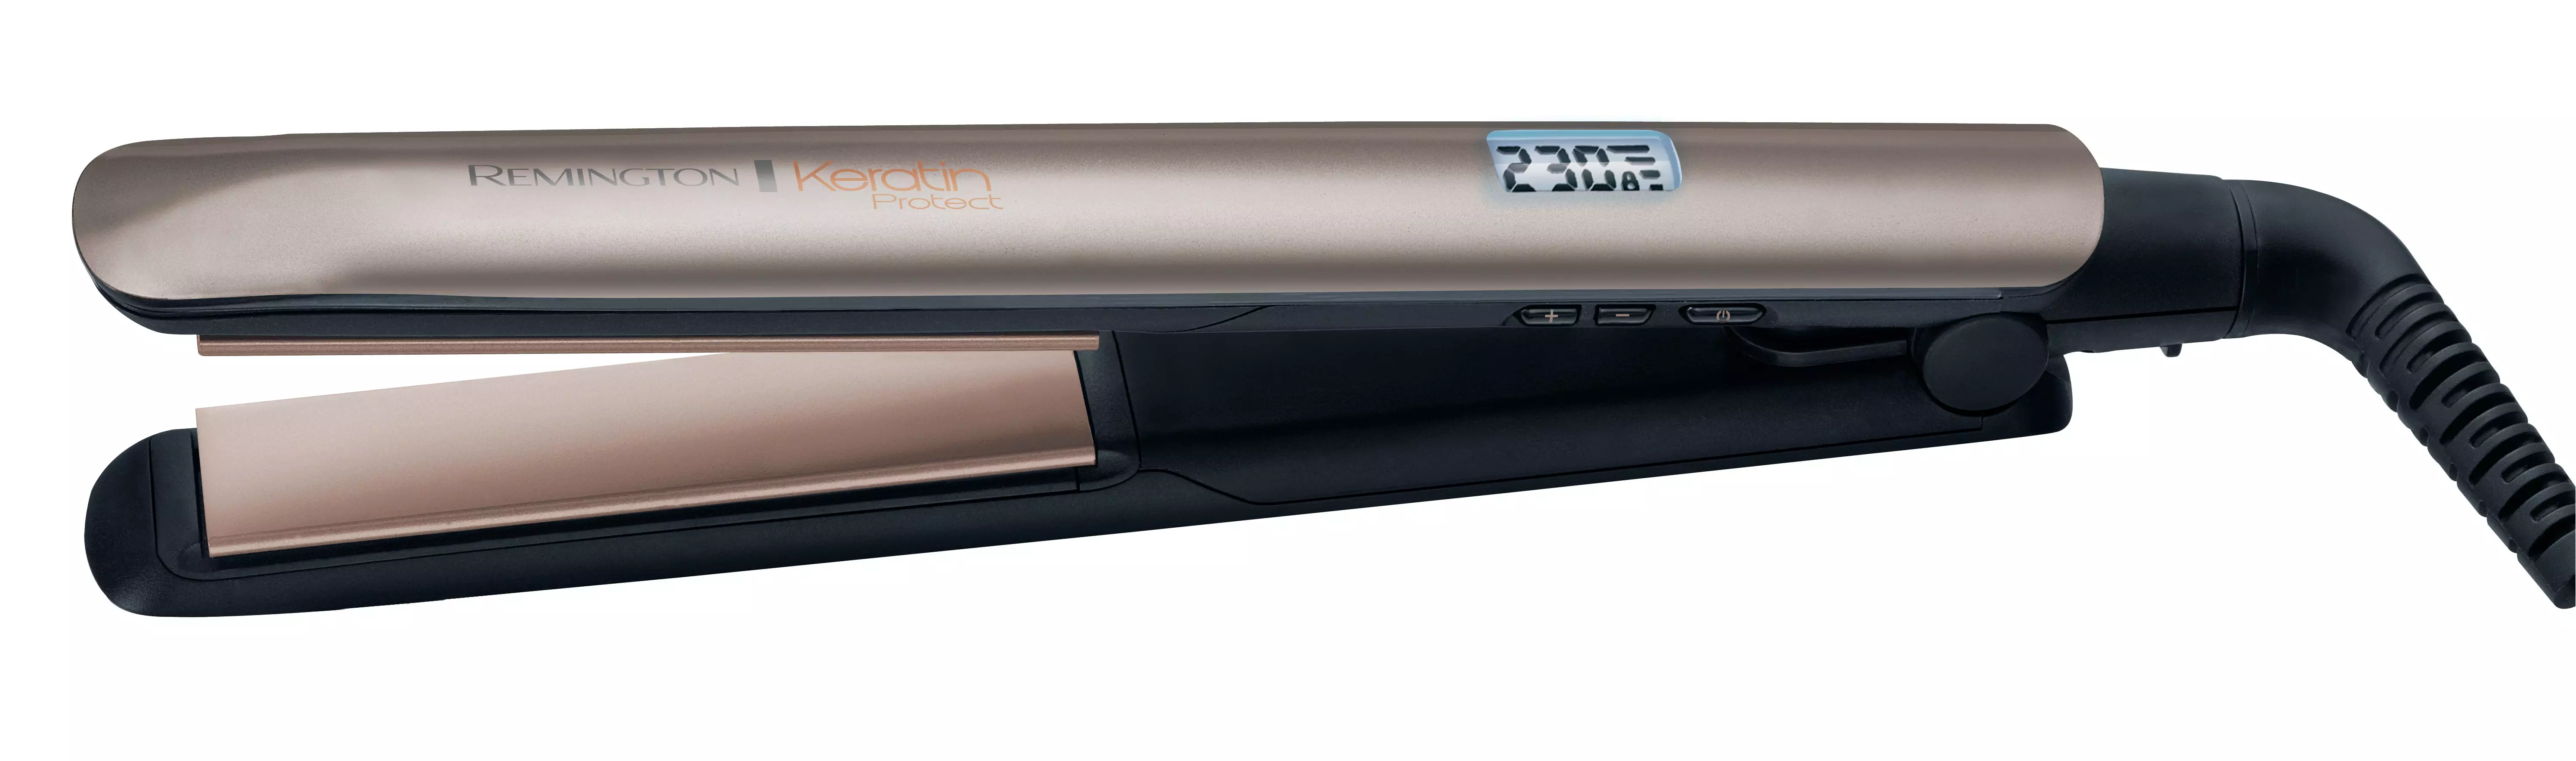 Remington Keratin Protect Straightener S8540